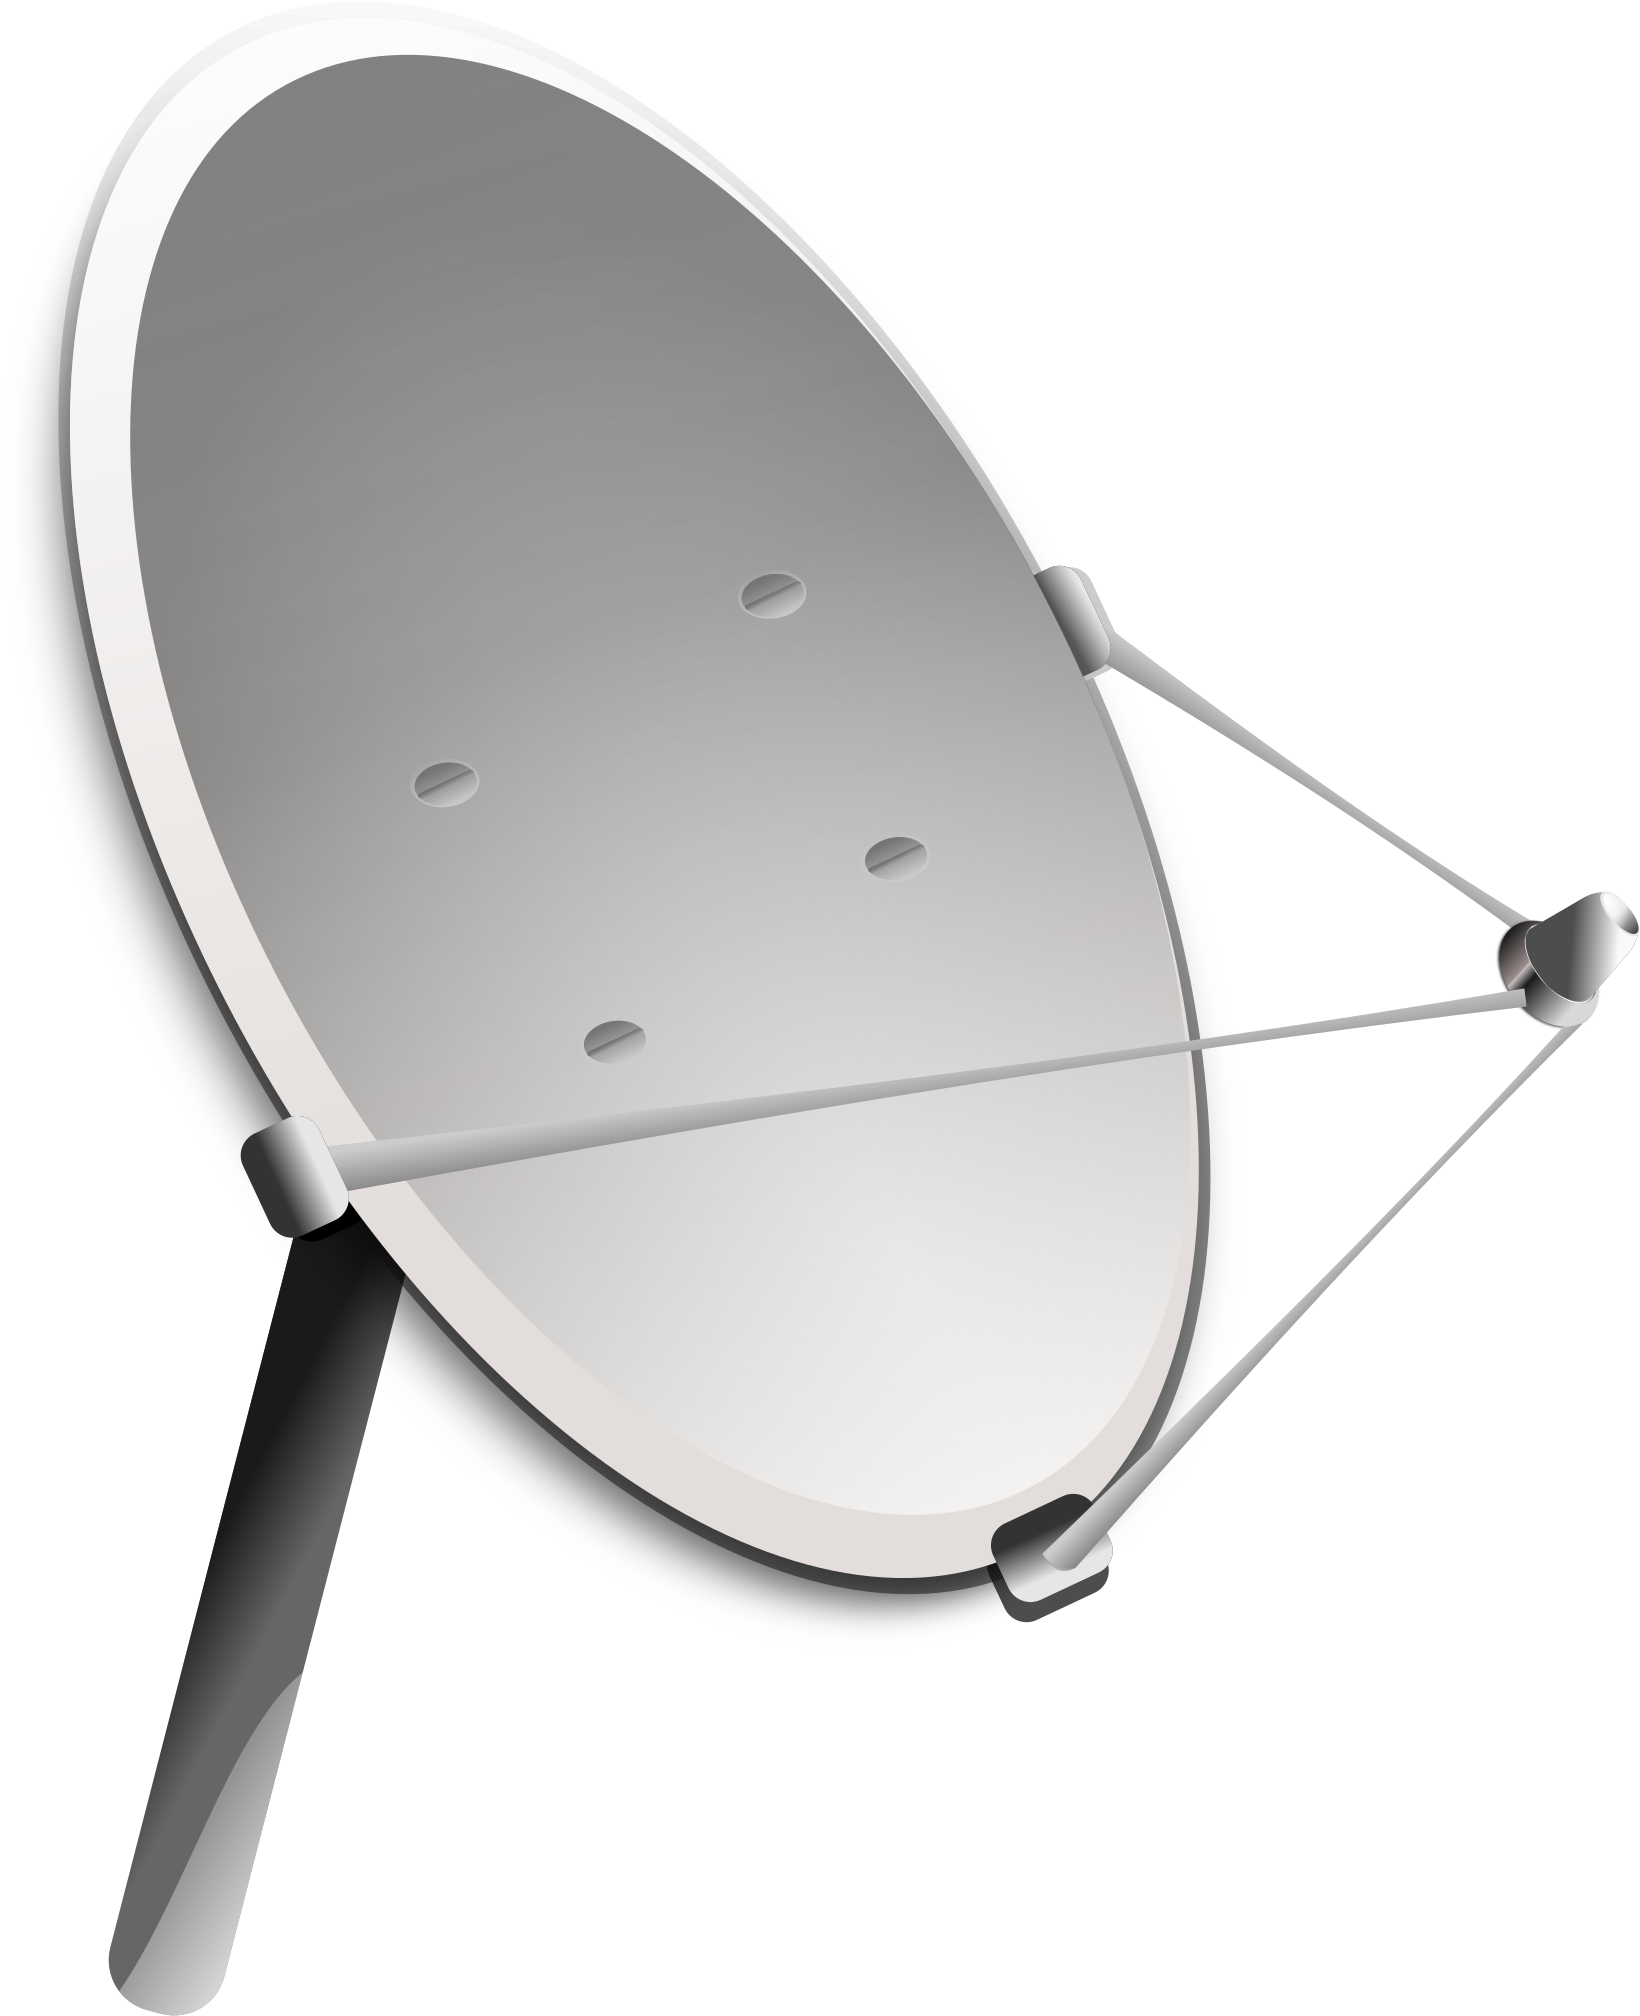 Satellite dish. Спутниковая антенна. Спутниковая тарелка. Параболическая антенна. Антенна тарелка.